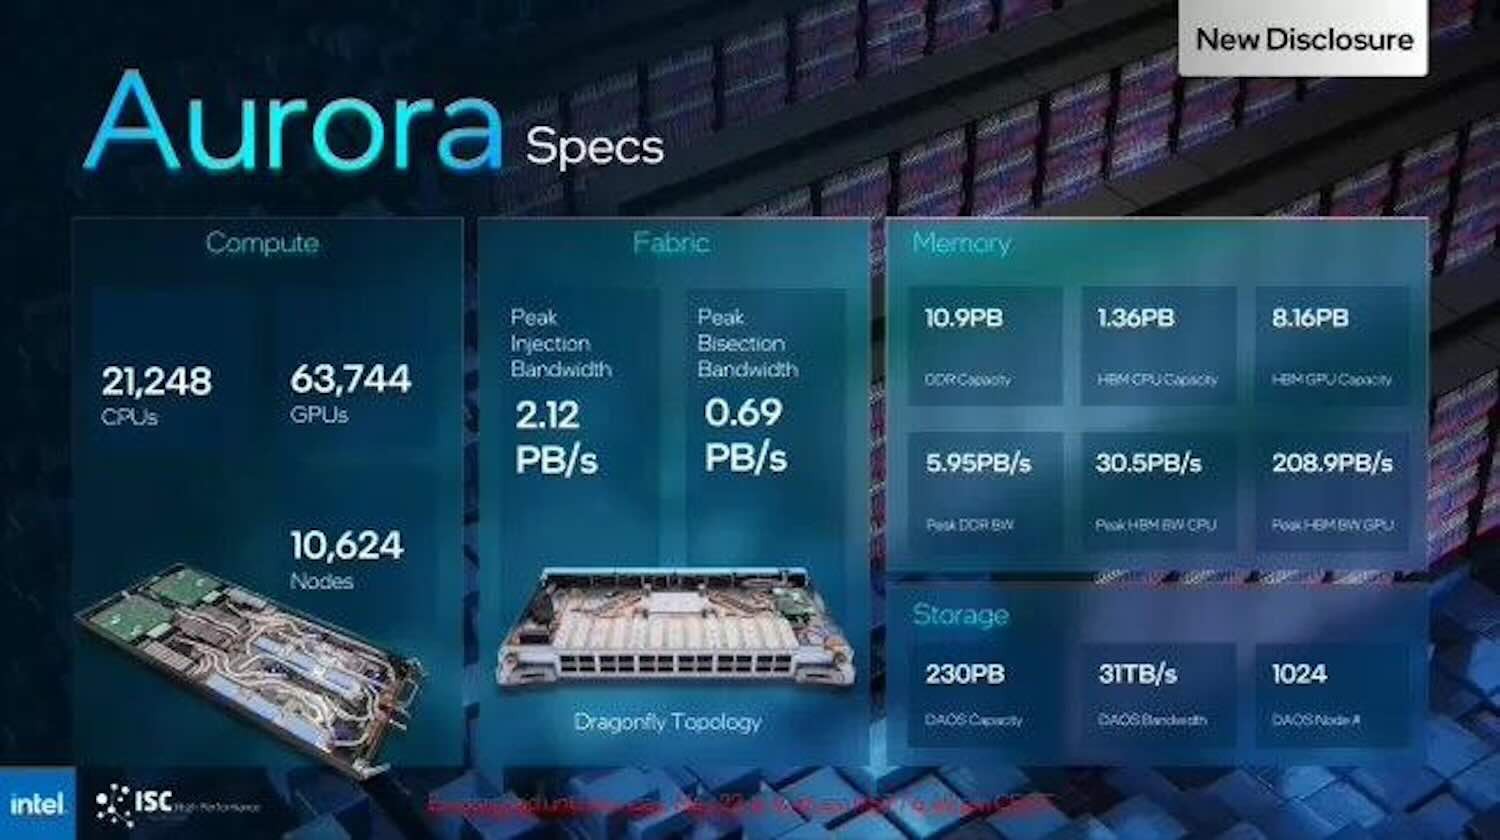 Ban-sao-Aurora-Computer-Specs.jpeg